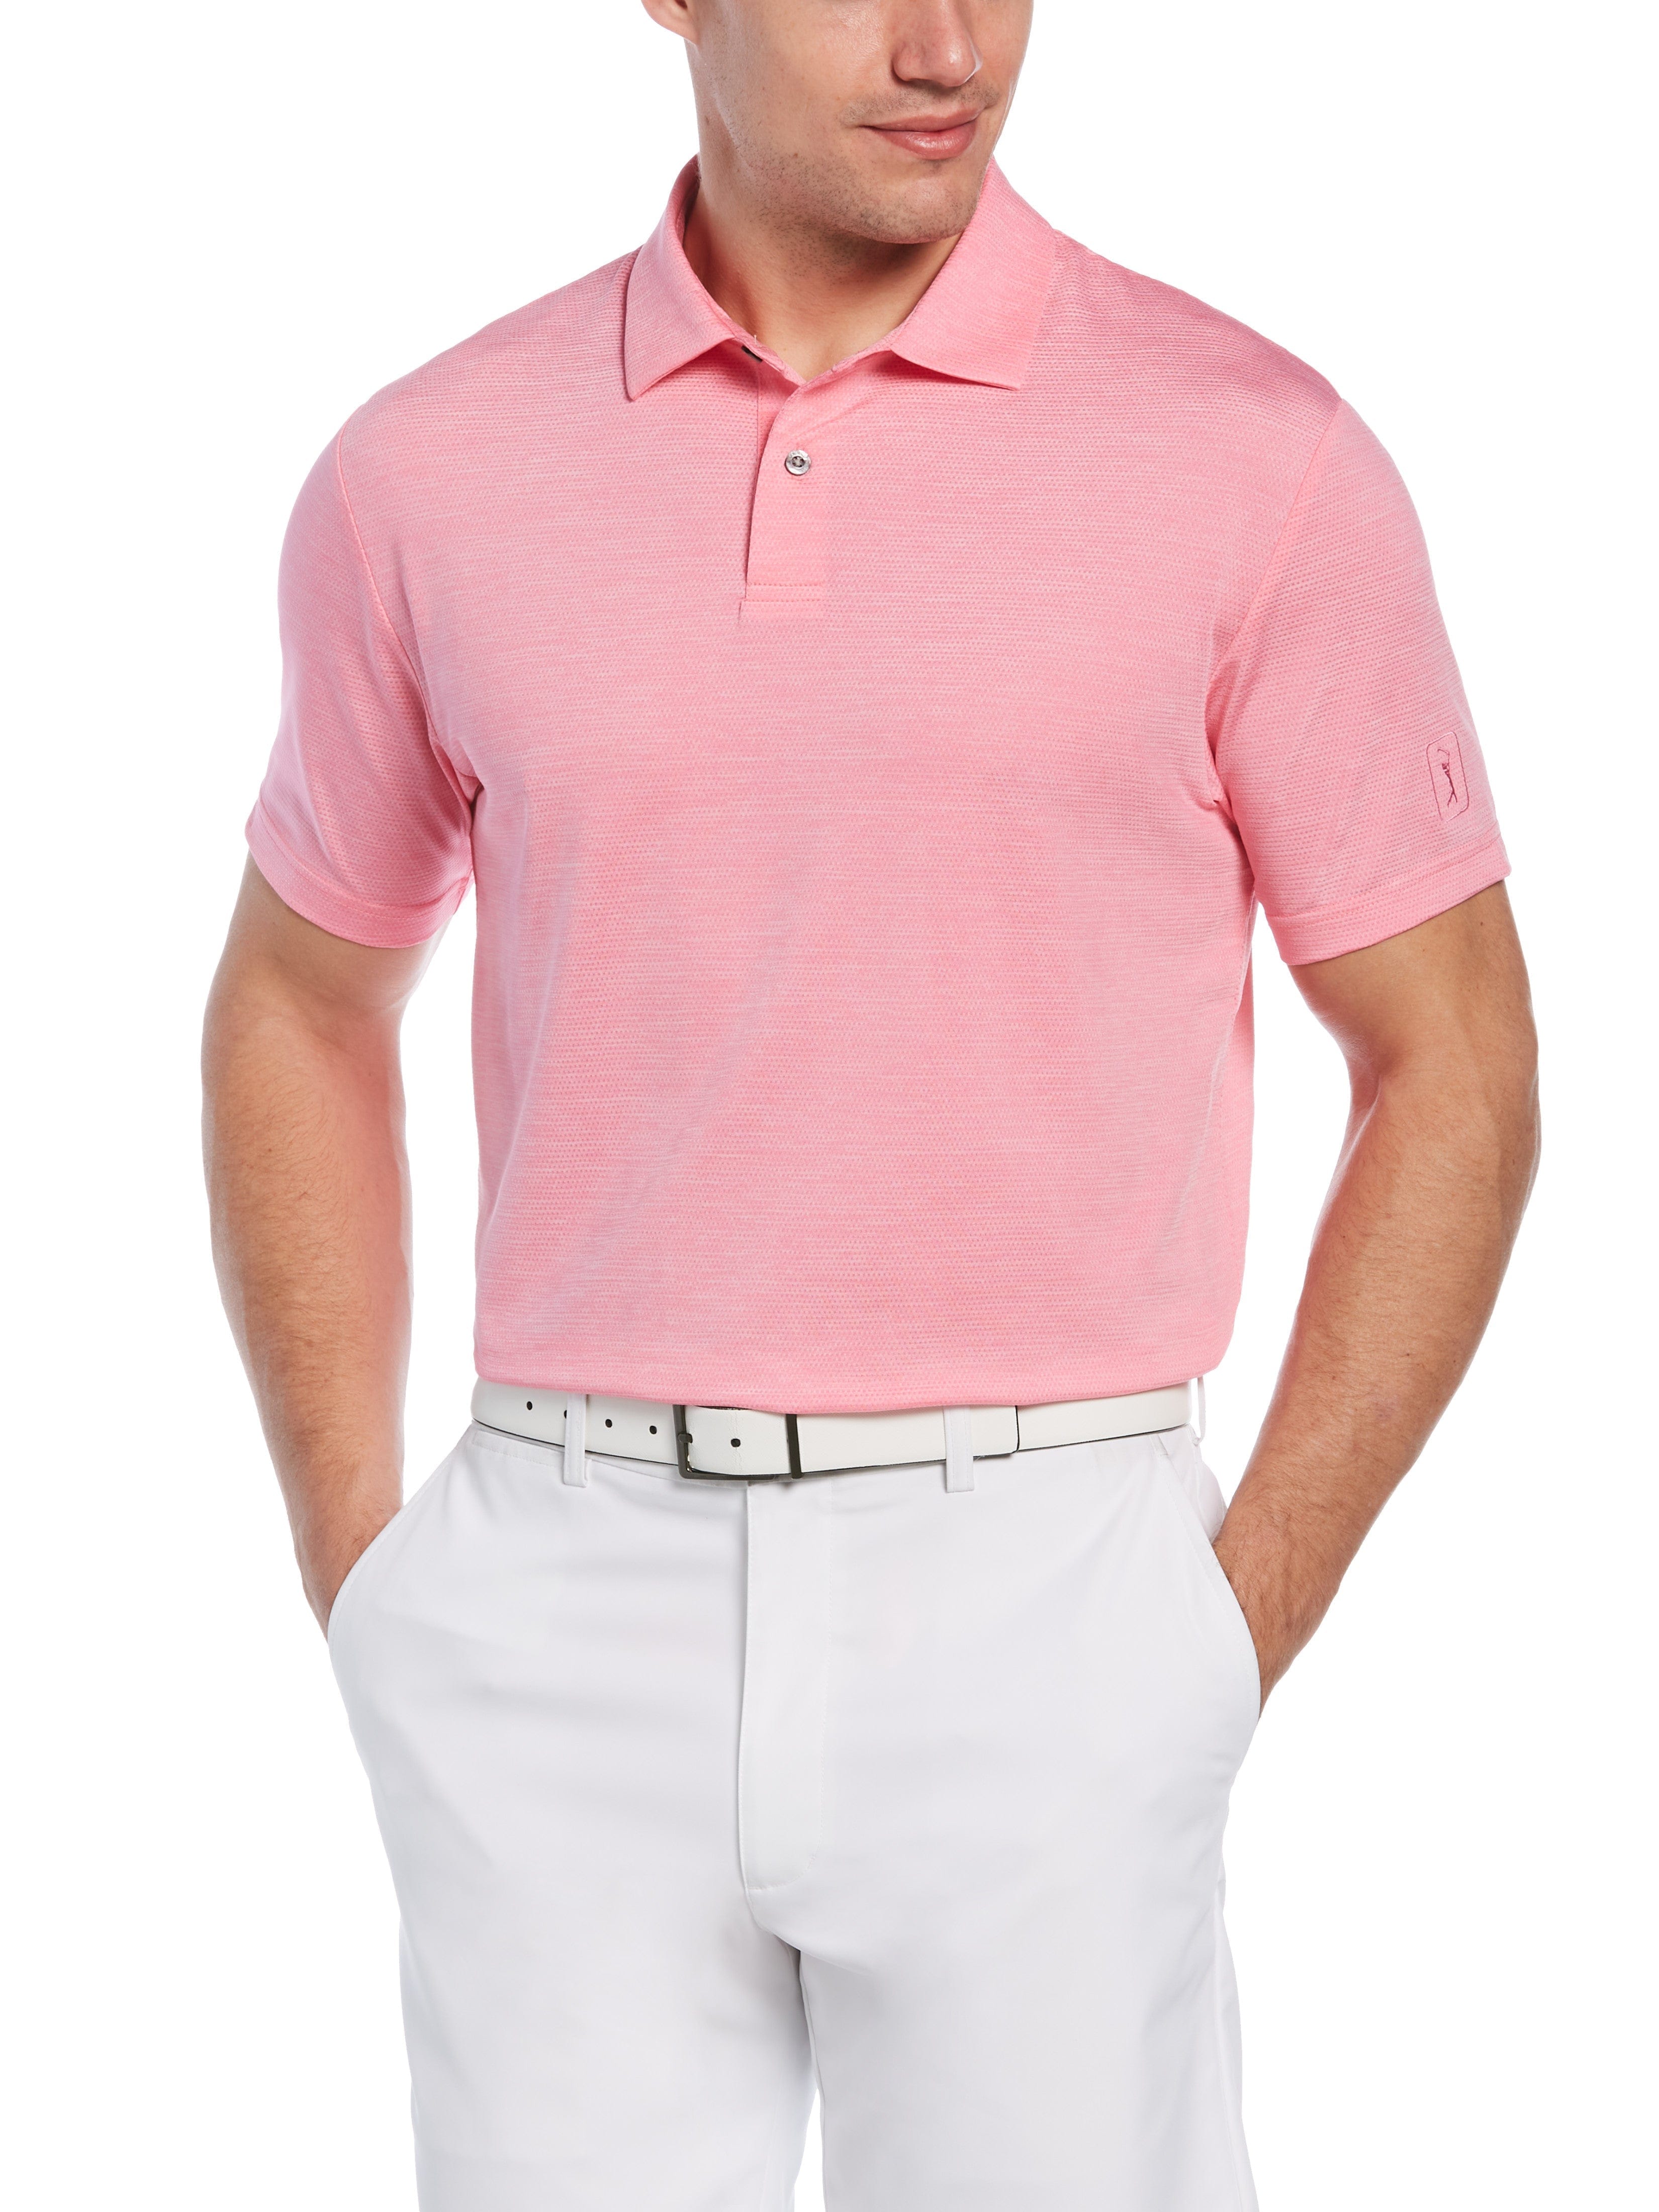 PGA TOUR Apparel Mens Space Dye Texture Golf Polo Shirt, Size 2XL, Carnation Heather Pink | Golf Apparel Shop